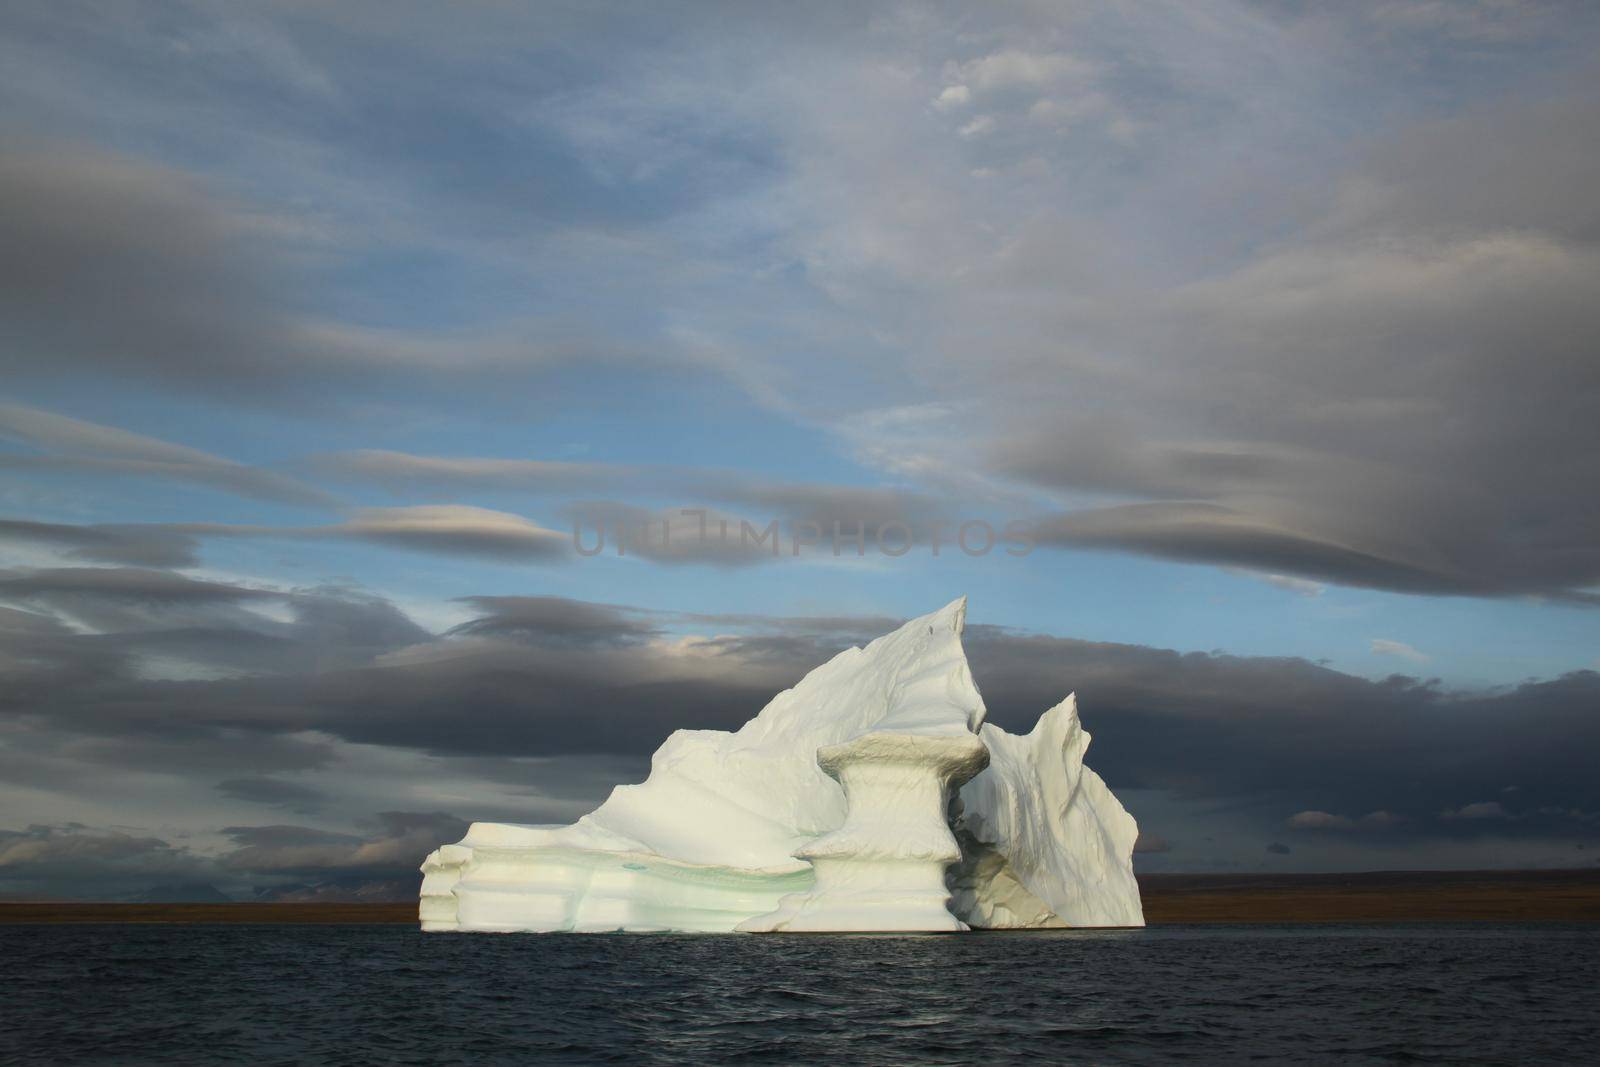 Stranded tabular iceberg and ice near evening in arctic landscape, near Pond Inlet, Nunavut, Canada